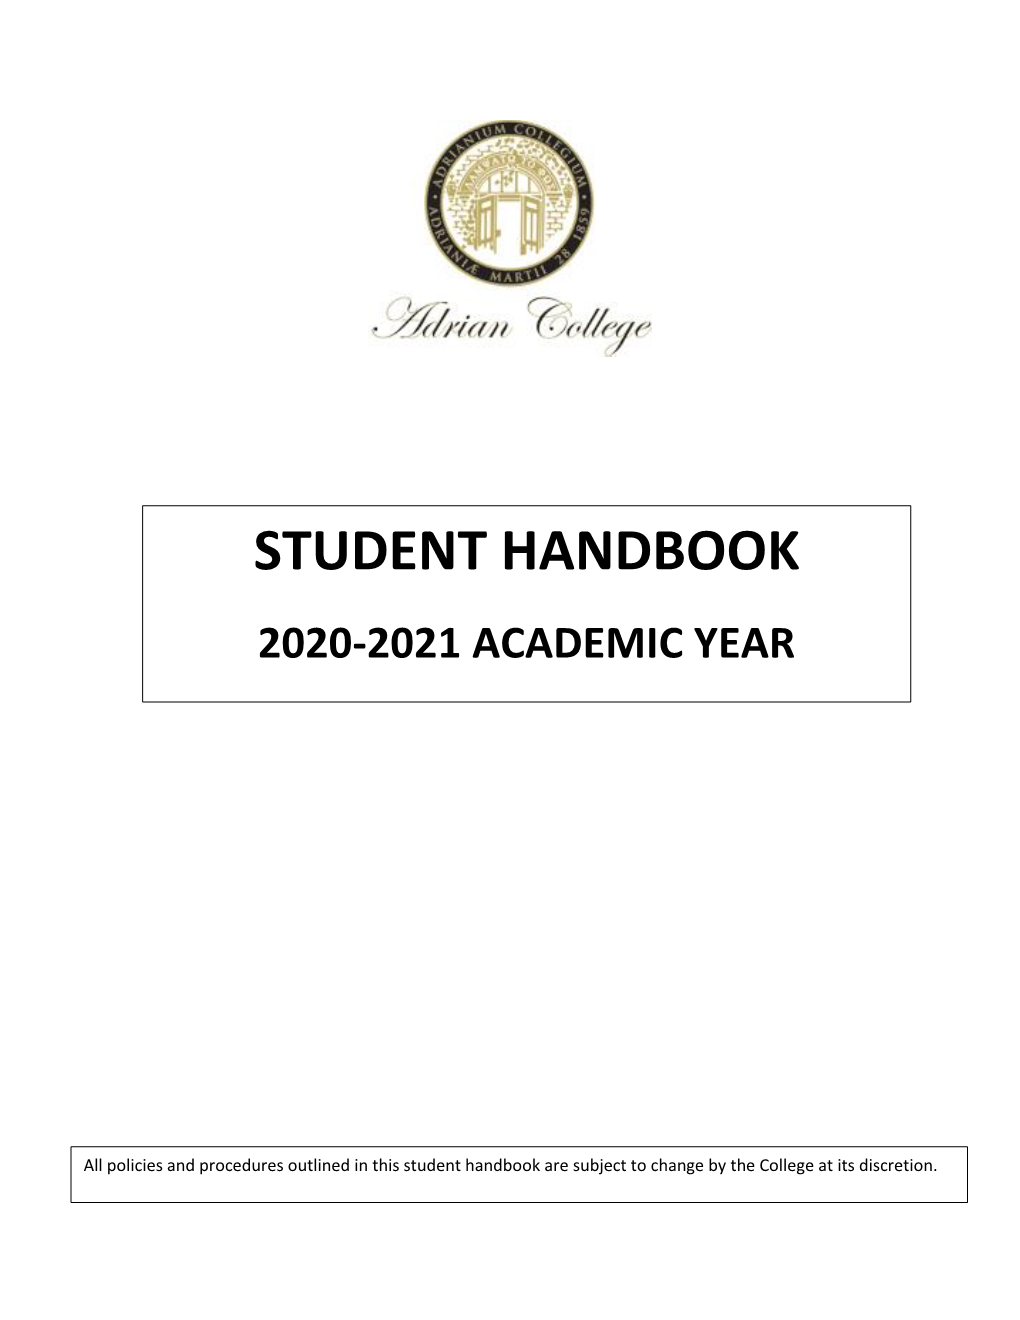 Student Handbook 2020-2021 Academic Year